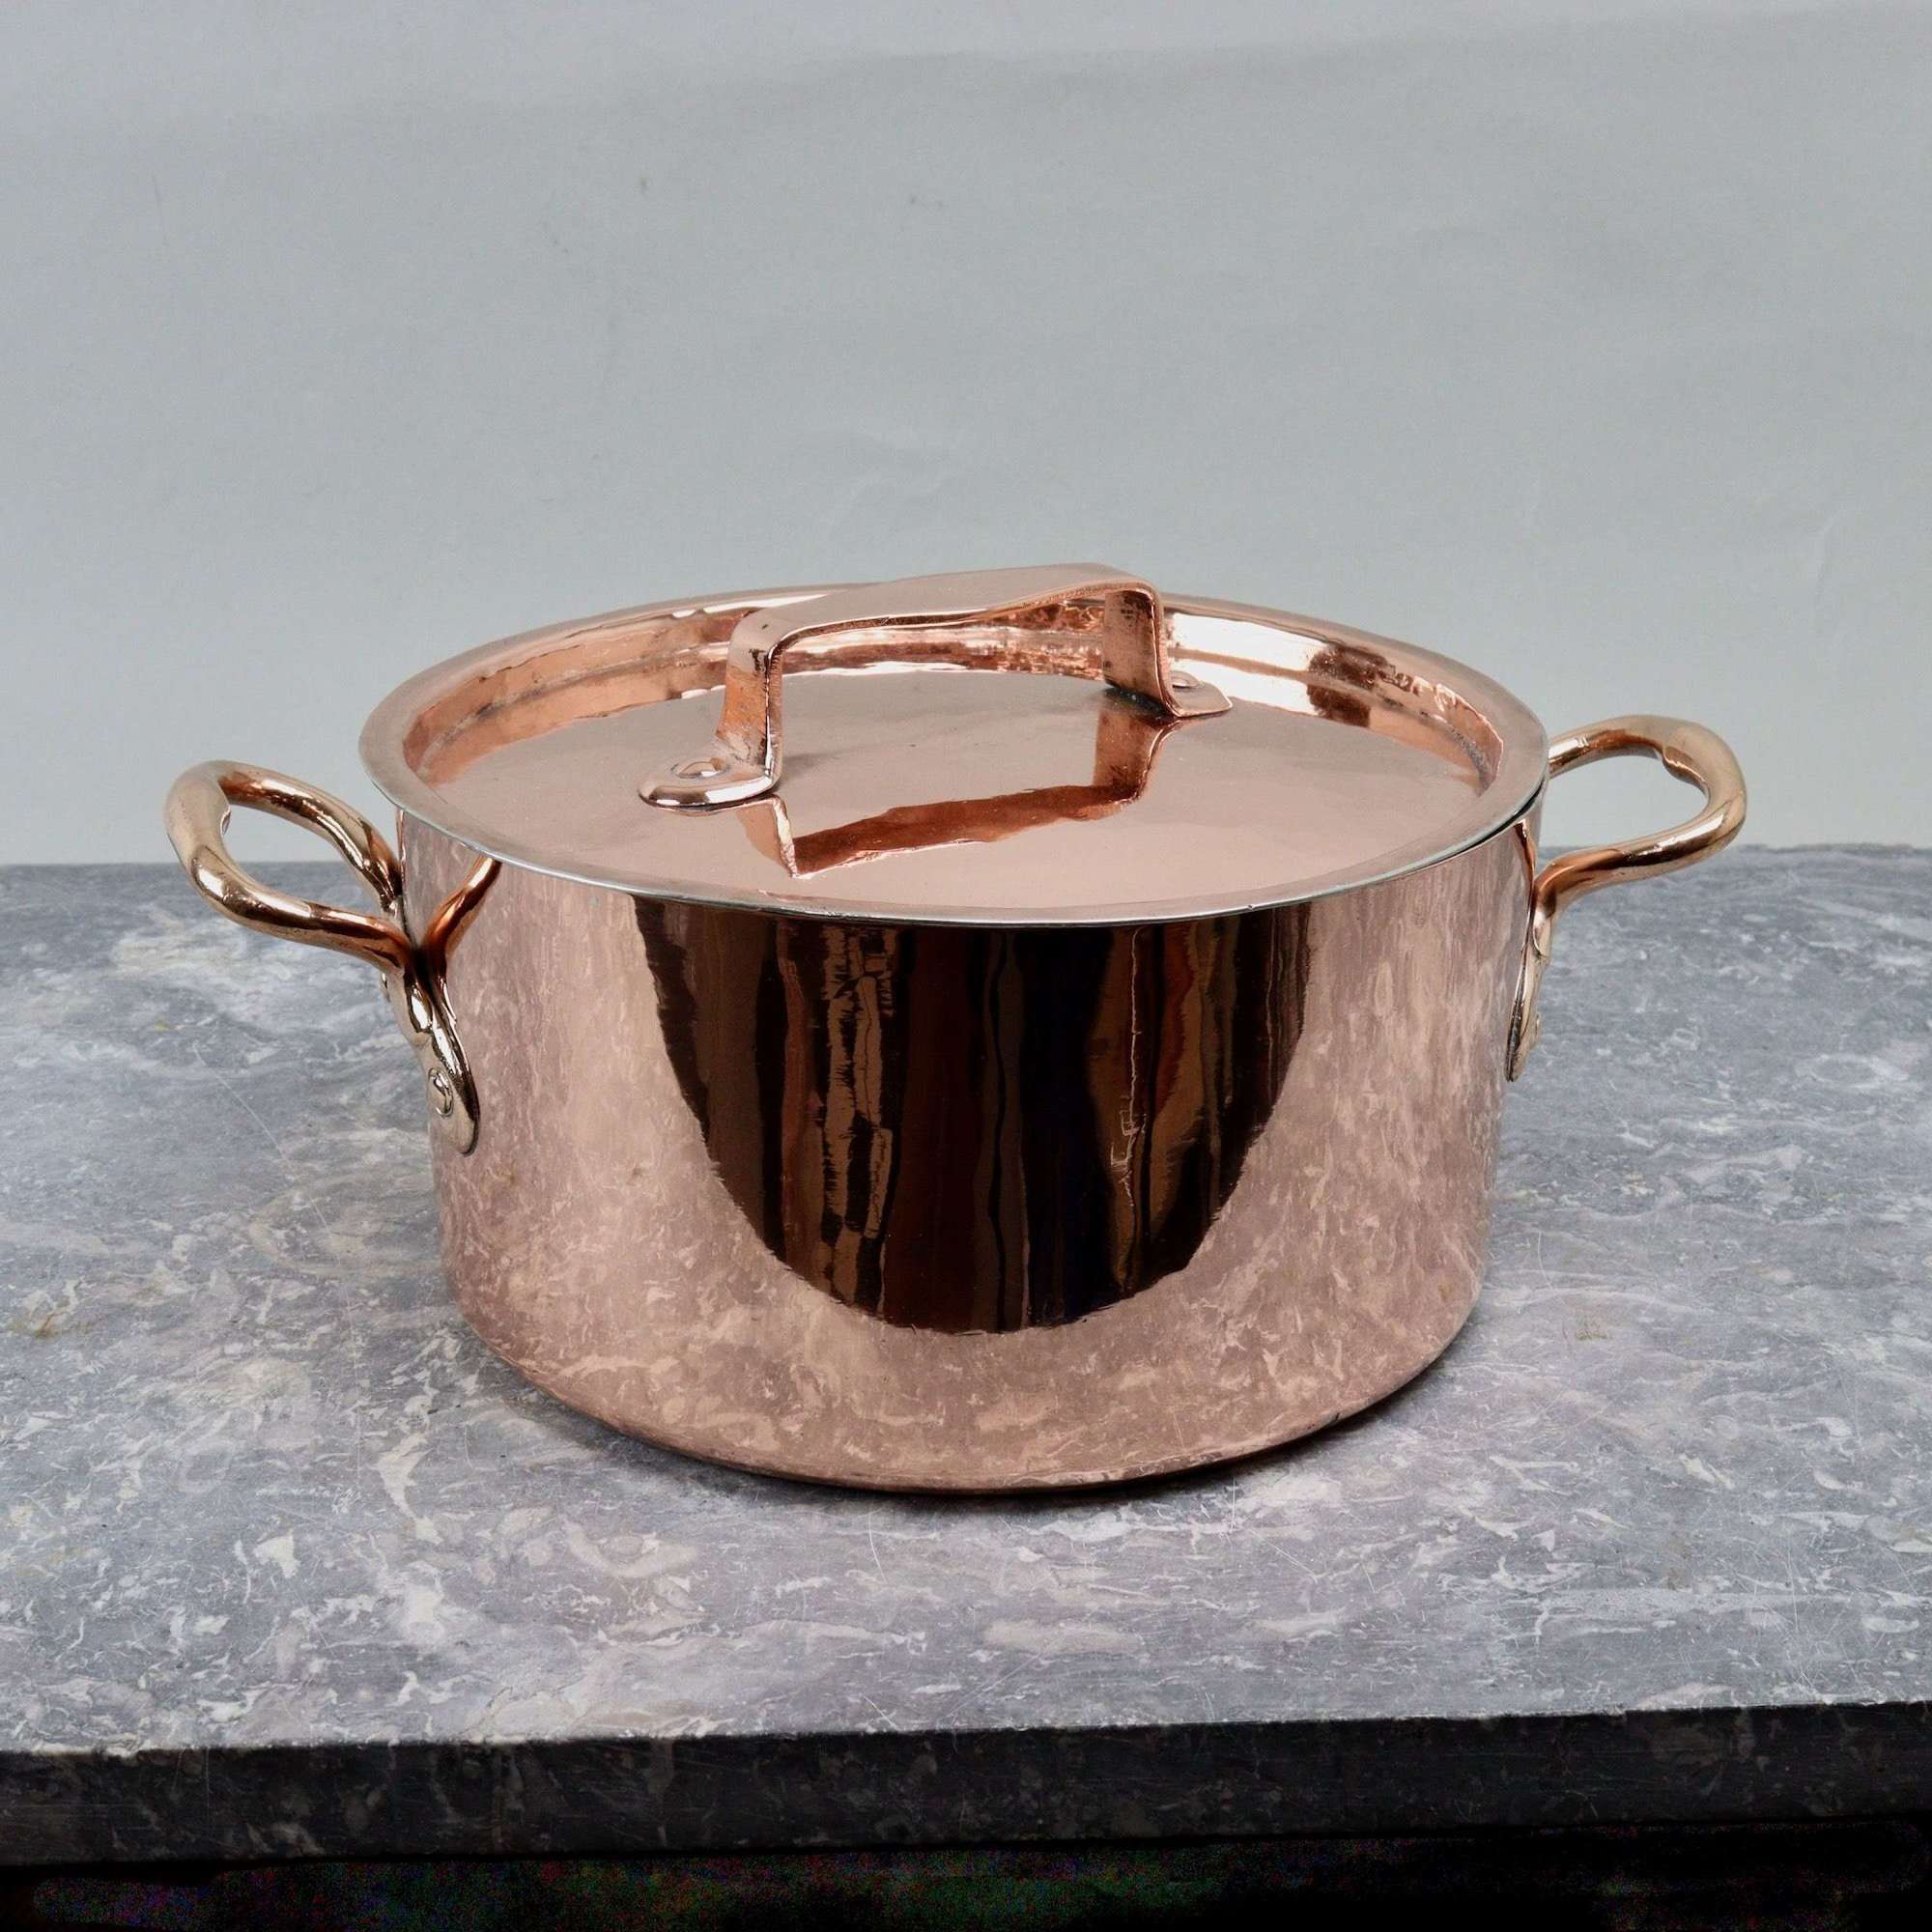 Shallow, 19th century Copper Stockpot